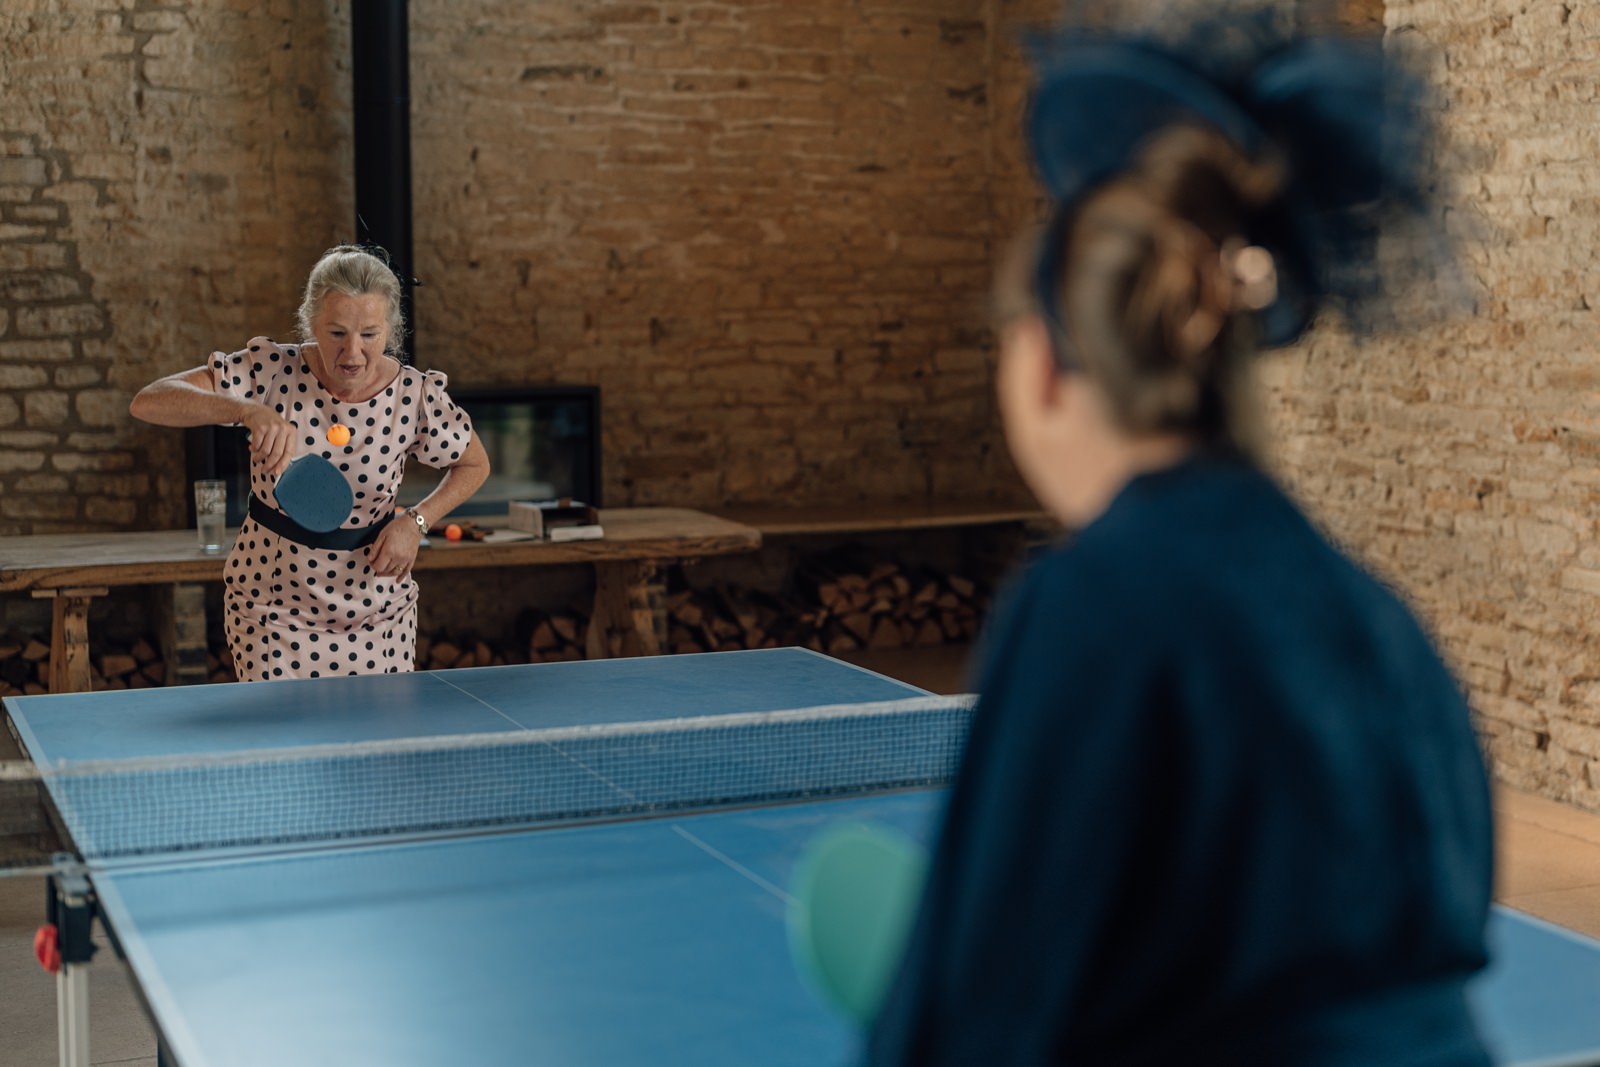 Wedding guests play ping pong